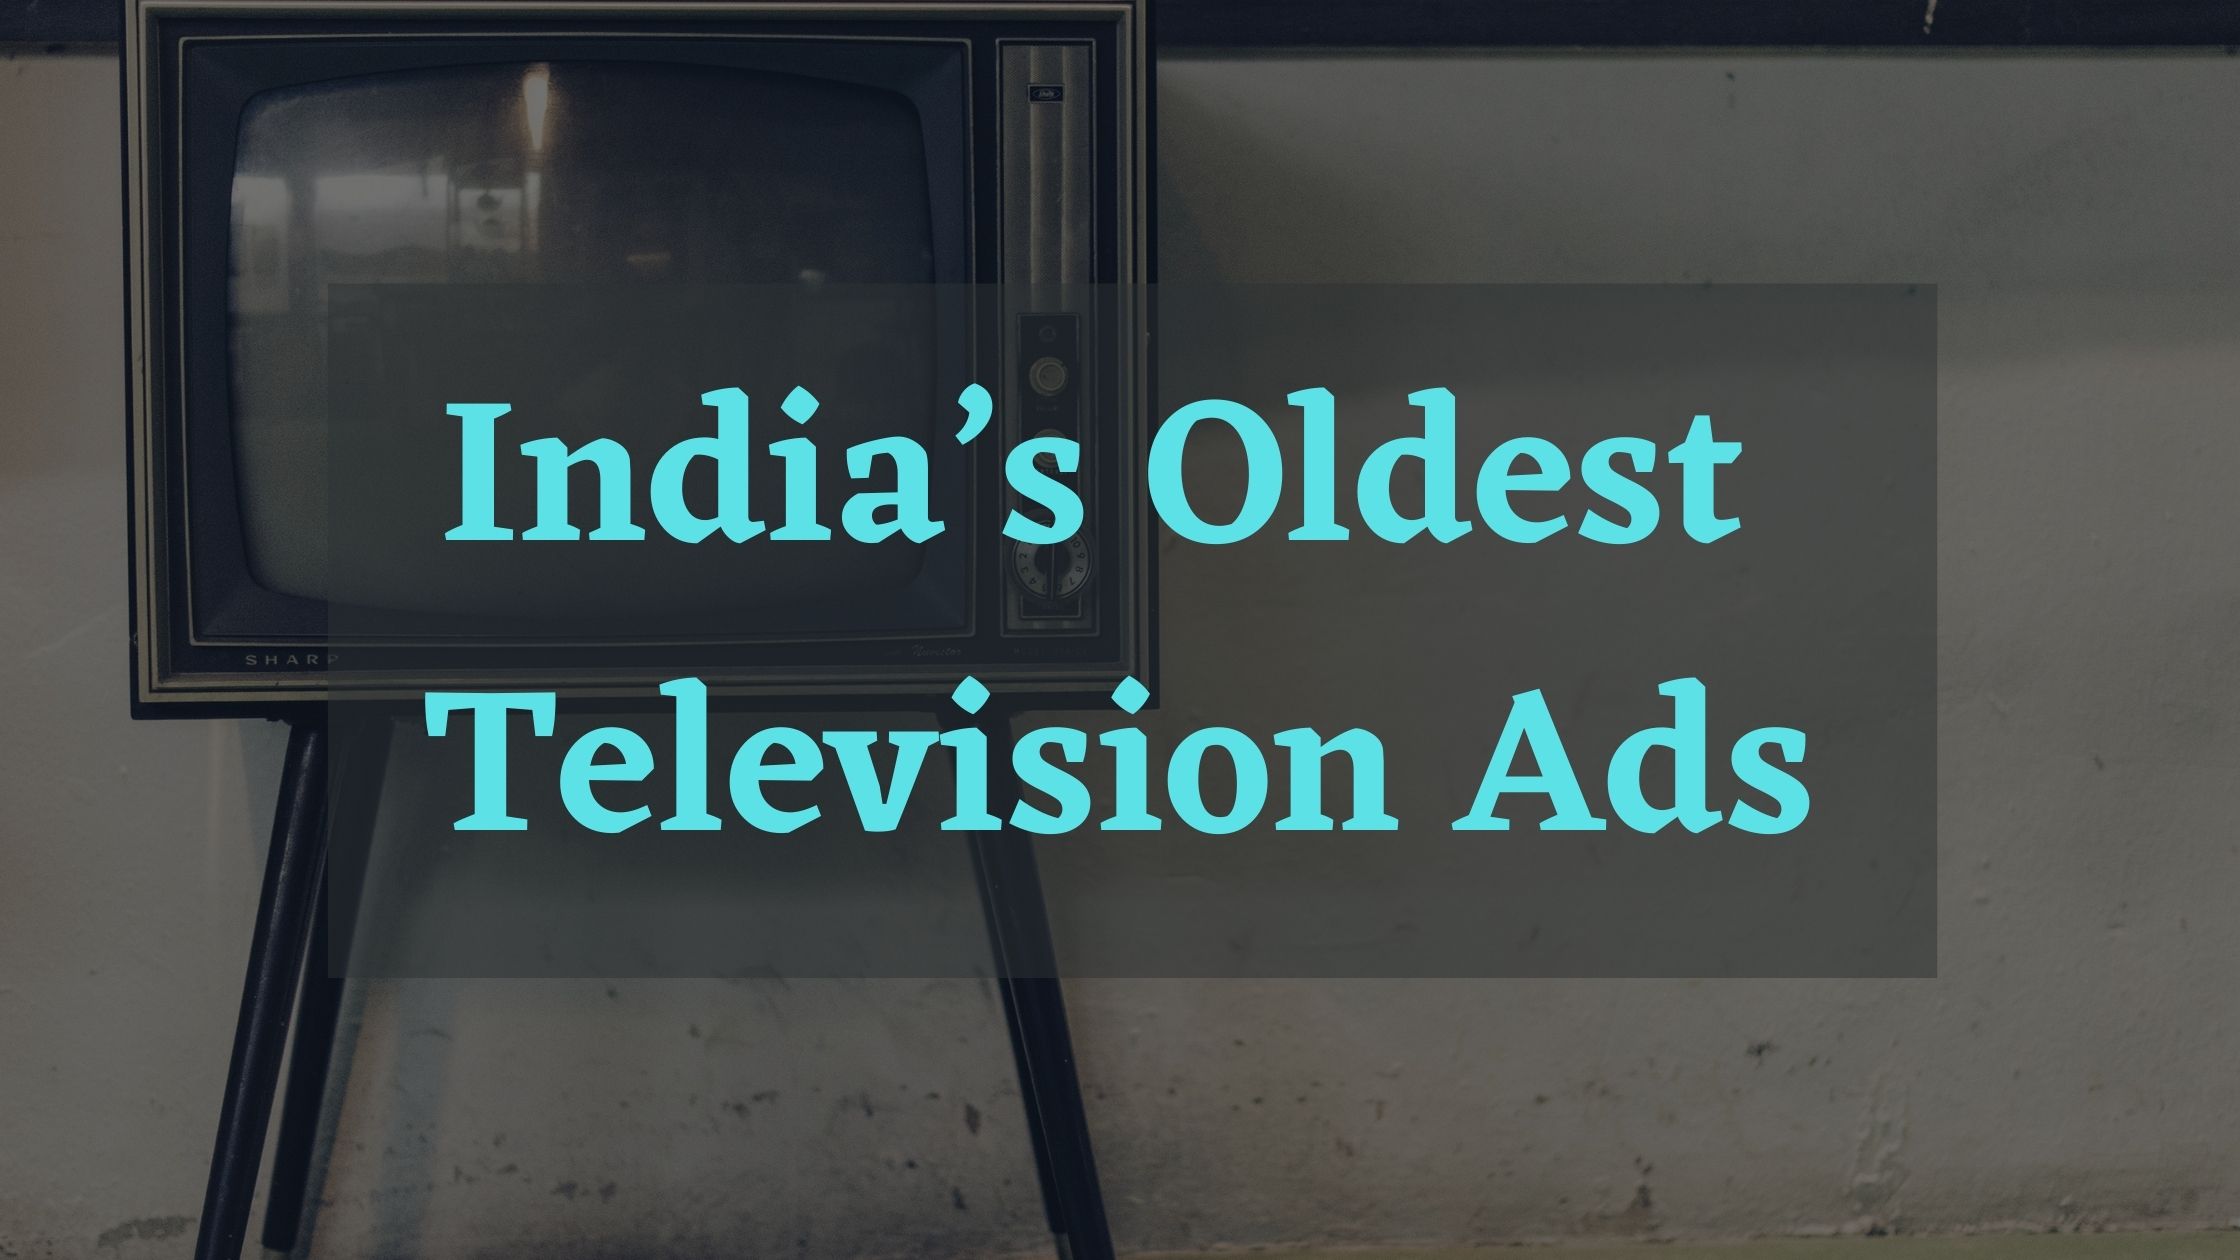 Indians-oldest-television-ads